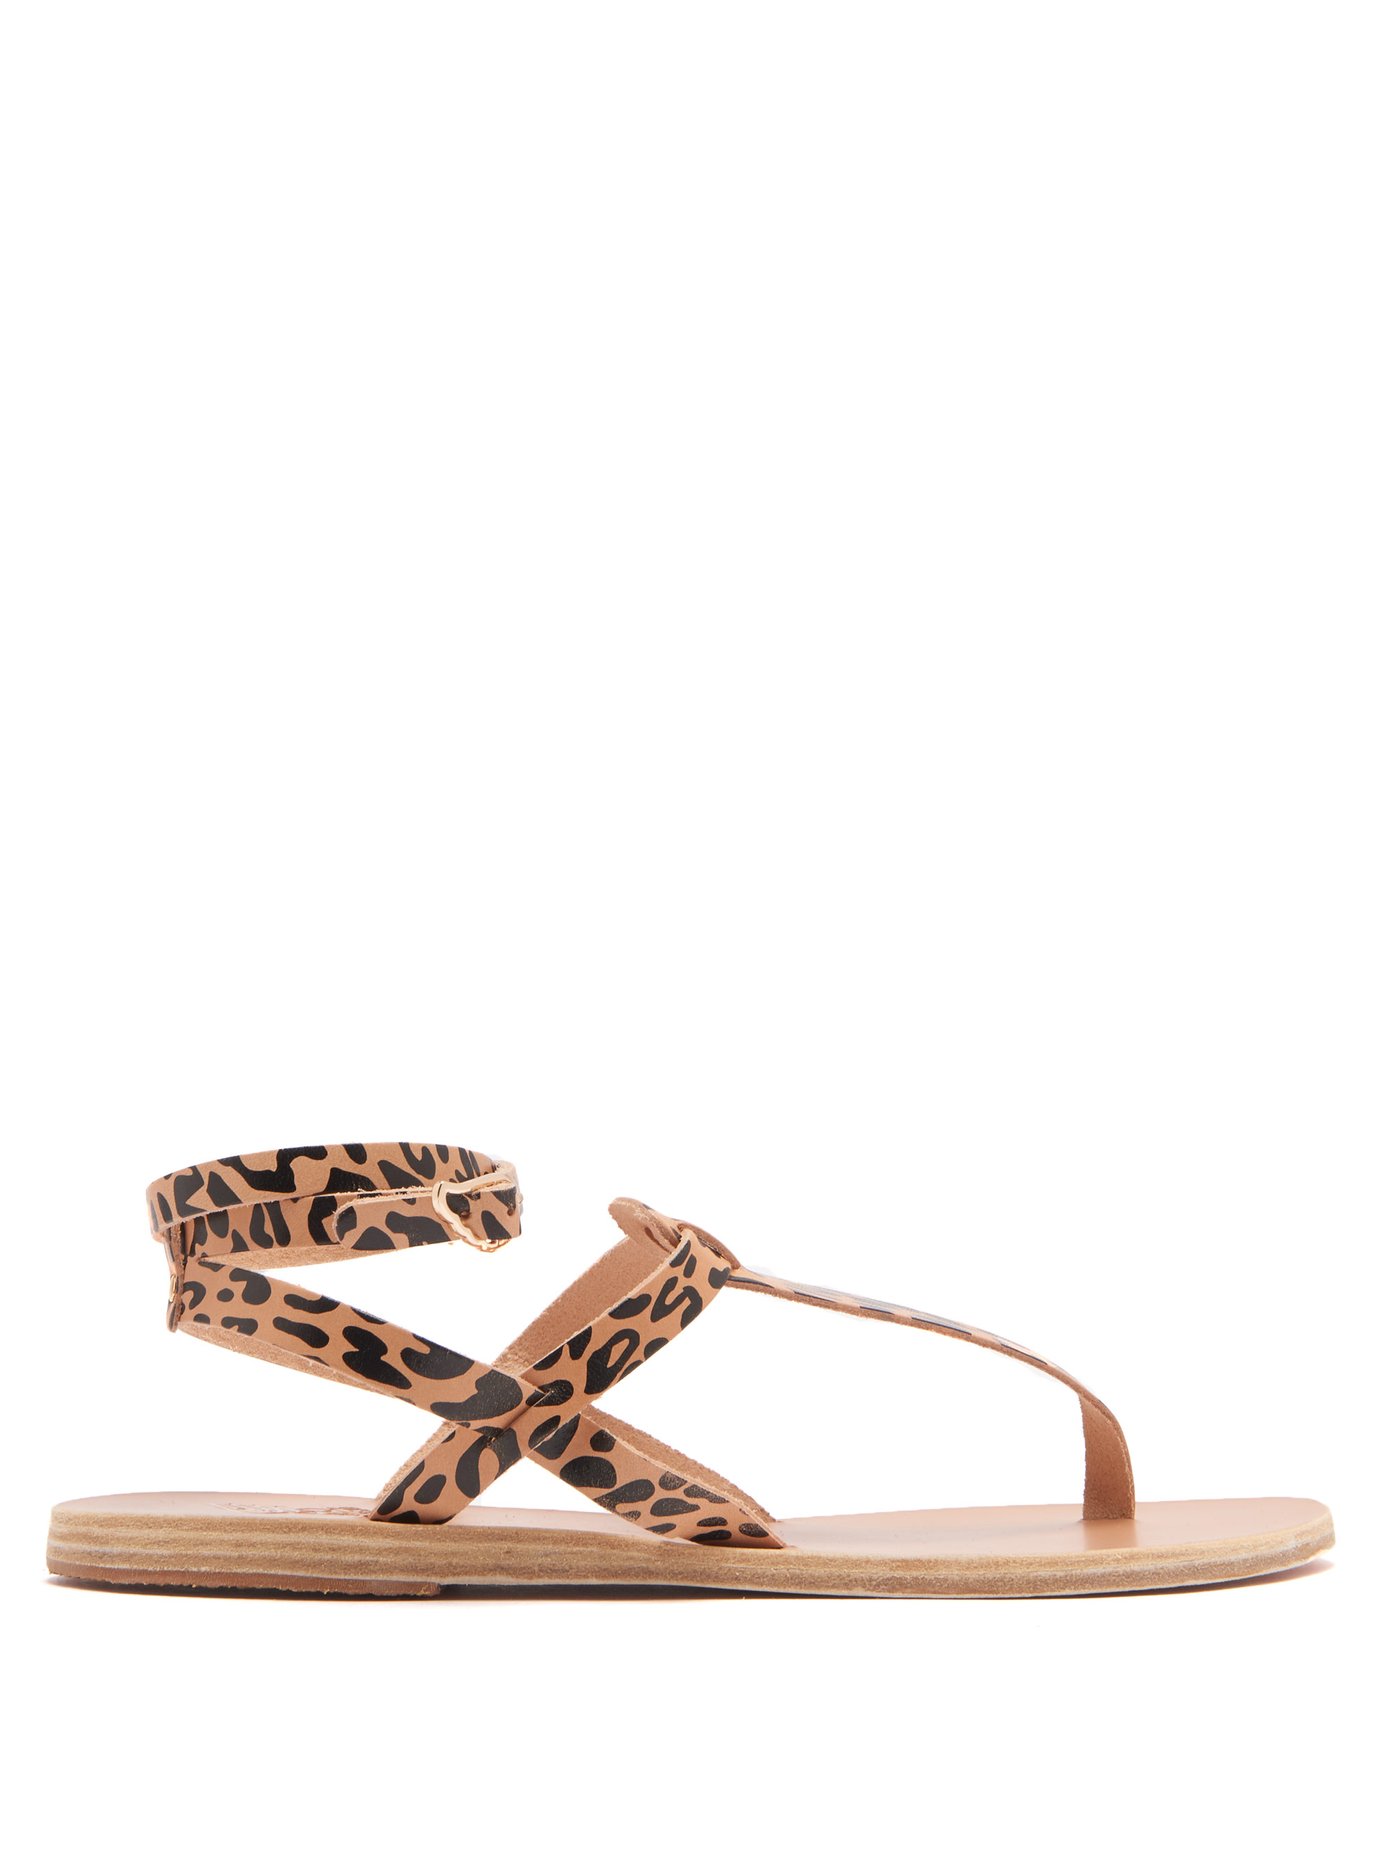 ancient greek leopard sandals